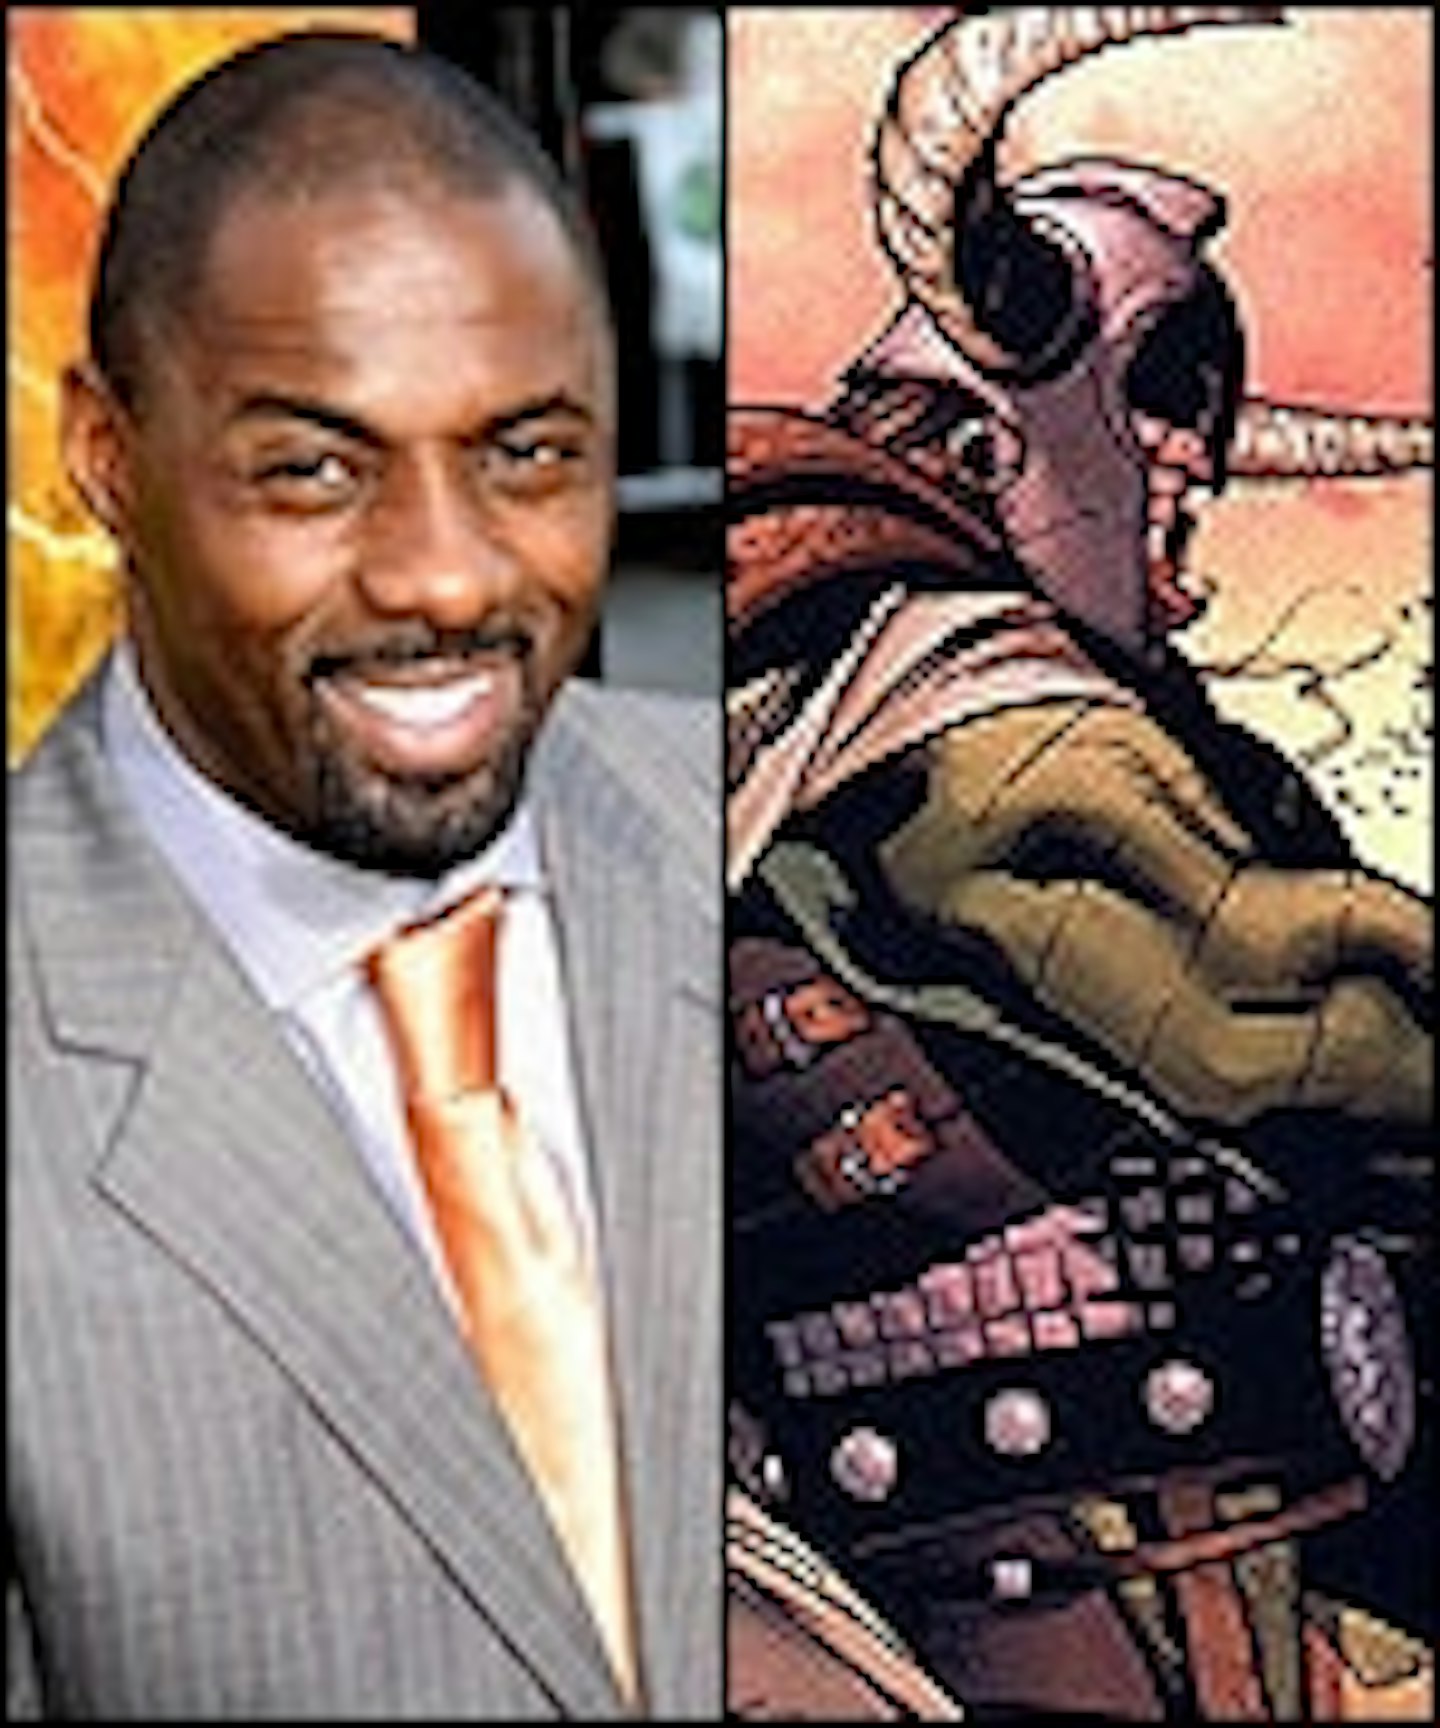 Today's Thor Cast News: Idris Elba